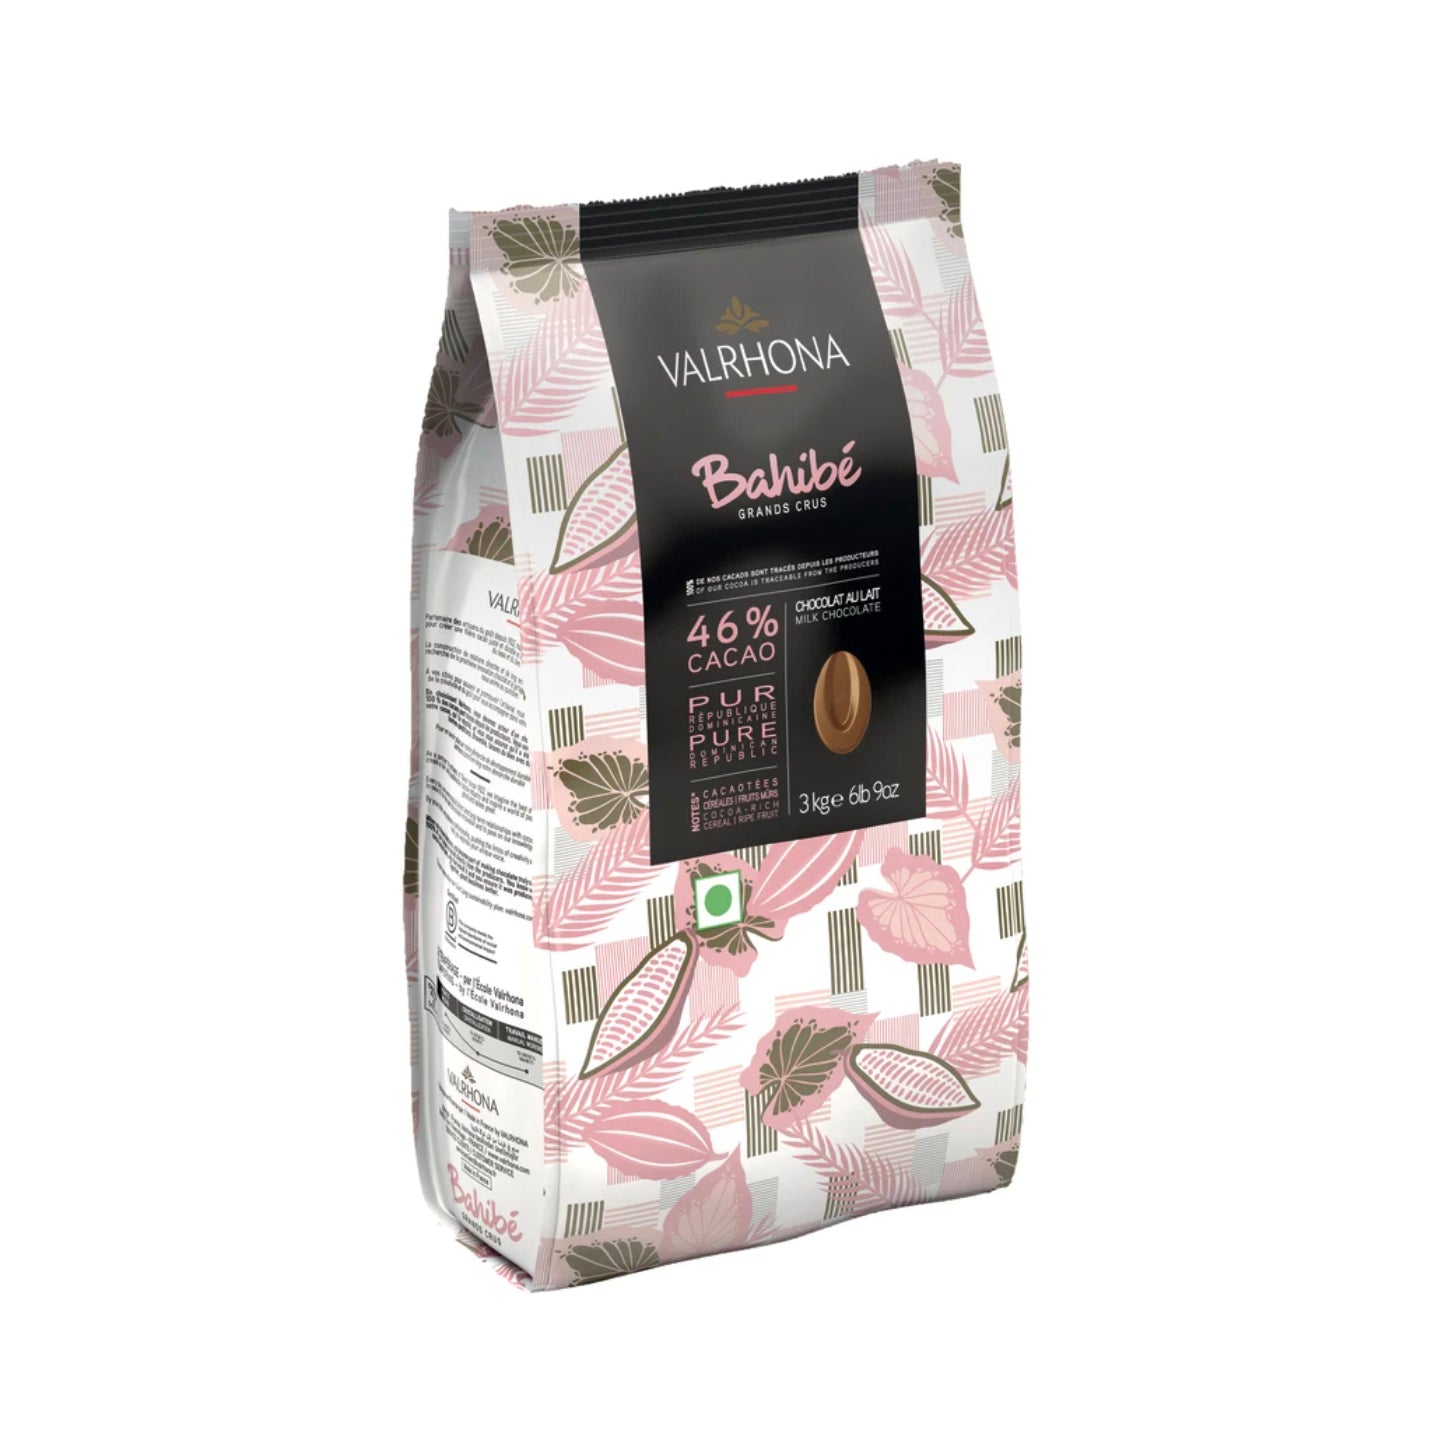 VALRHONA Bahibe 46%, Milk Chocolate Couverture